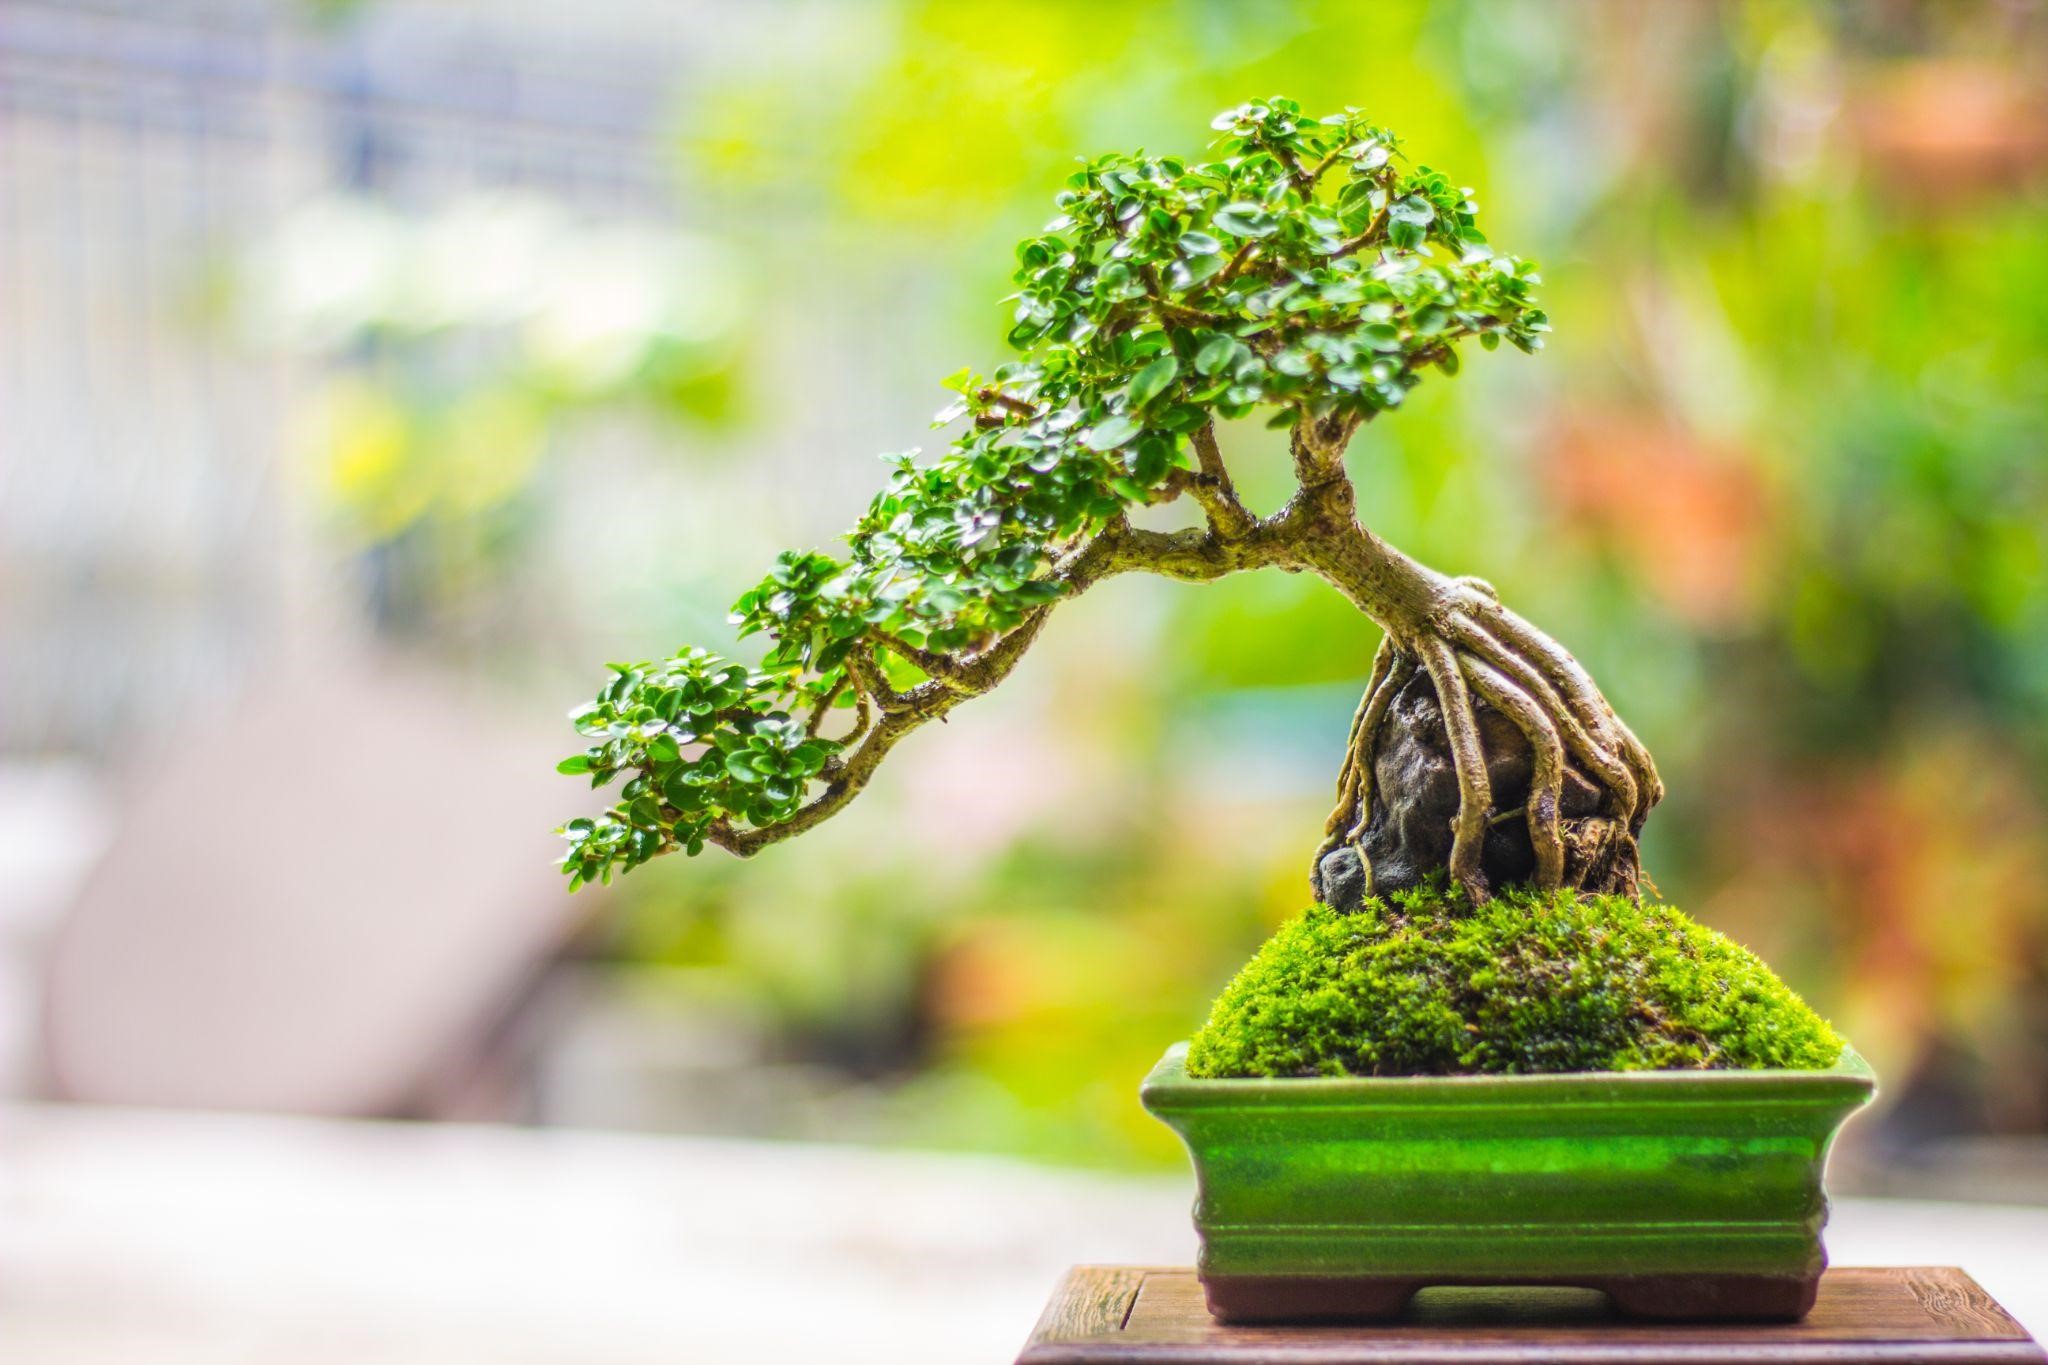 Bonsai Trees Take Centuries to Grow and Years of Training